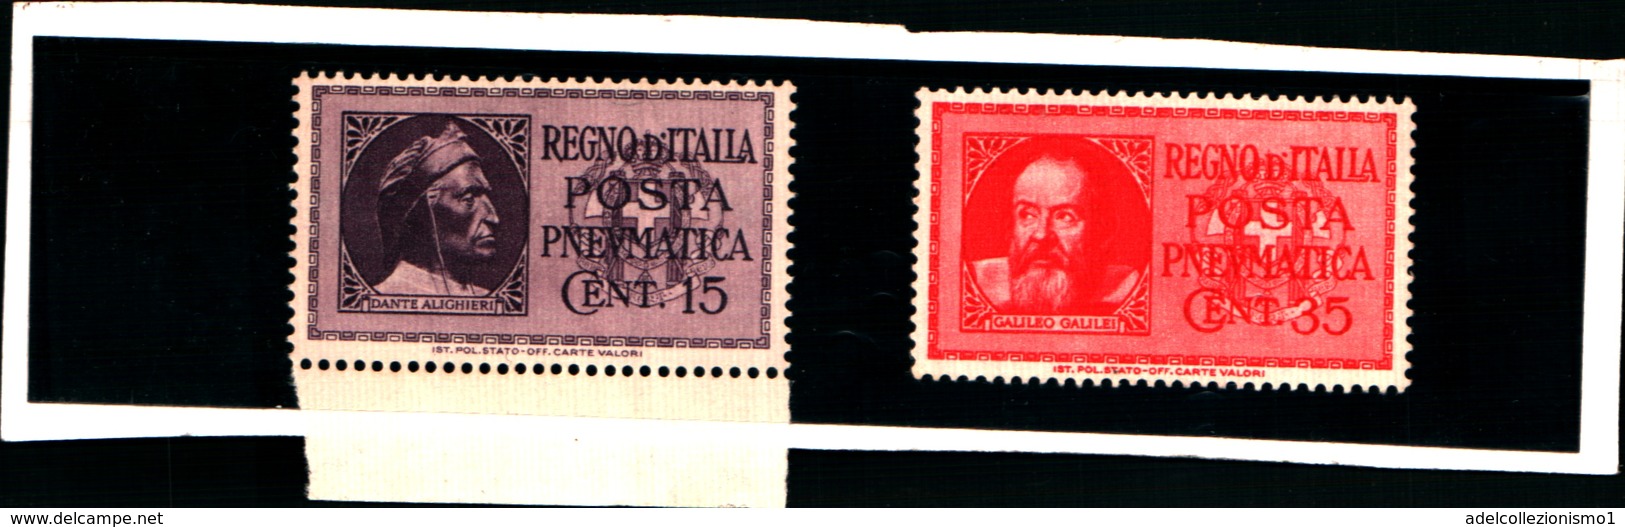 10014) ITALIA-Effigie Di Dante Alighieri E Galileo Galilei - POSTA PNEUMATICA - 29 Marzo 1933-SERIE MNH** - Poste Pneumatique